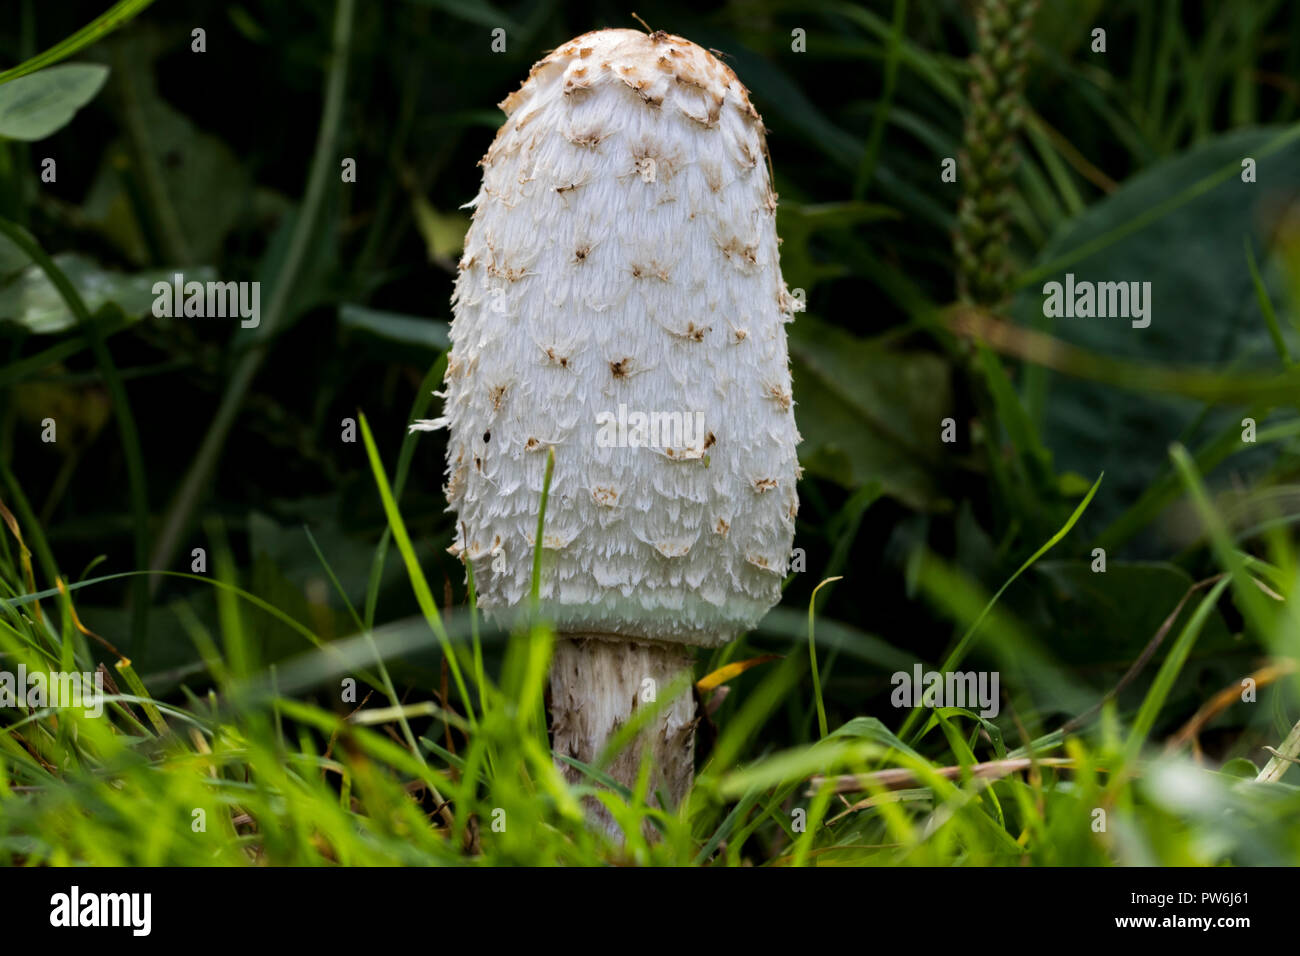 Choice edible mushroom growing in the grass. Coprinus comatus fungi close up. Stock Photo